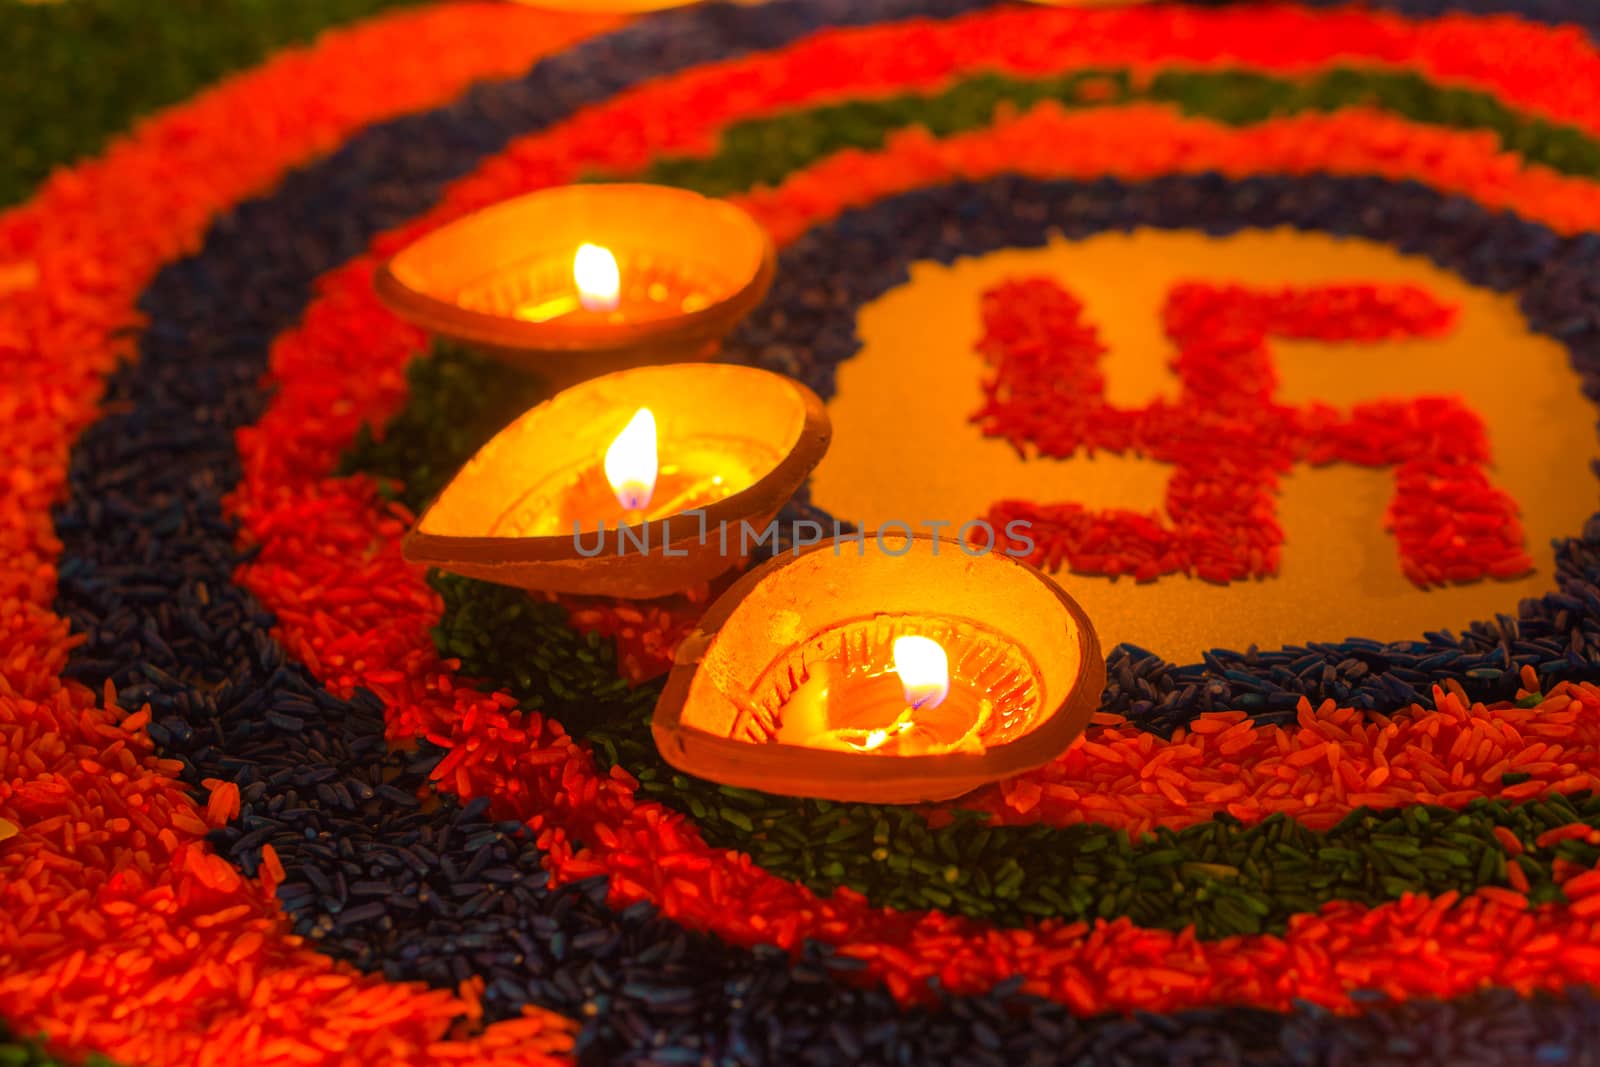 Indian festival Diwali, Diya oil lamps lit on colorful rangoli with Swastika symbol. Hindu traditional. Happy Deepavali.